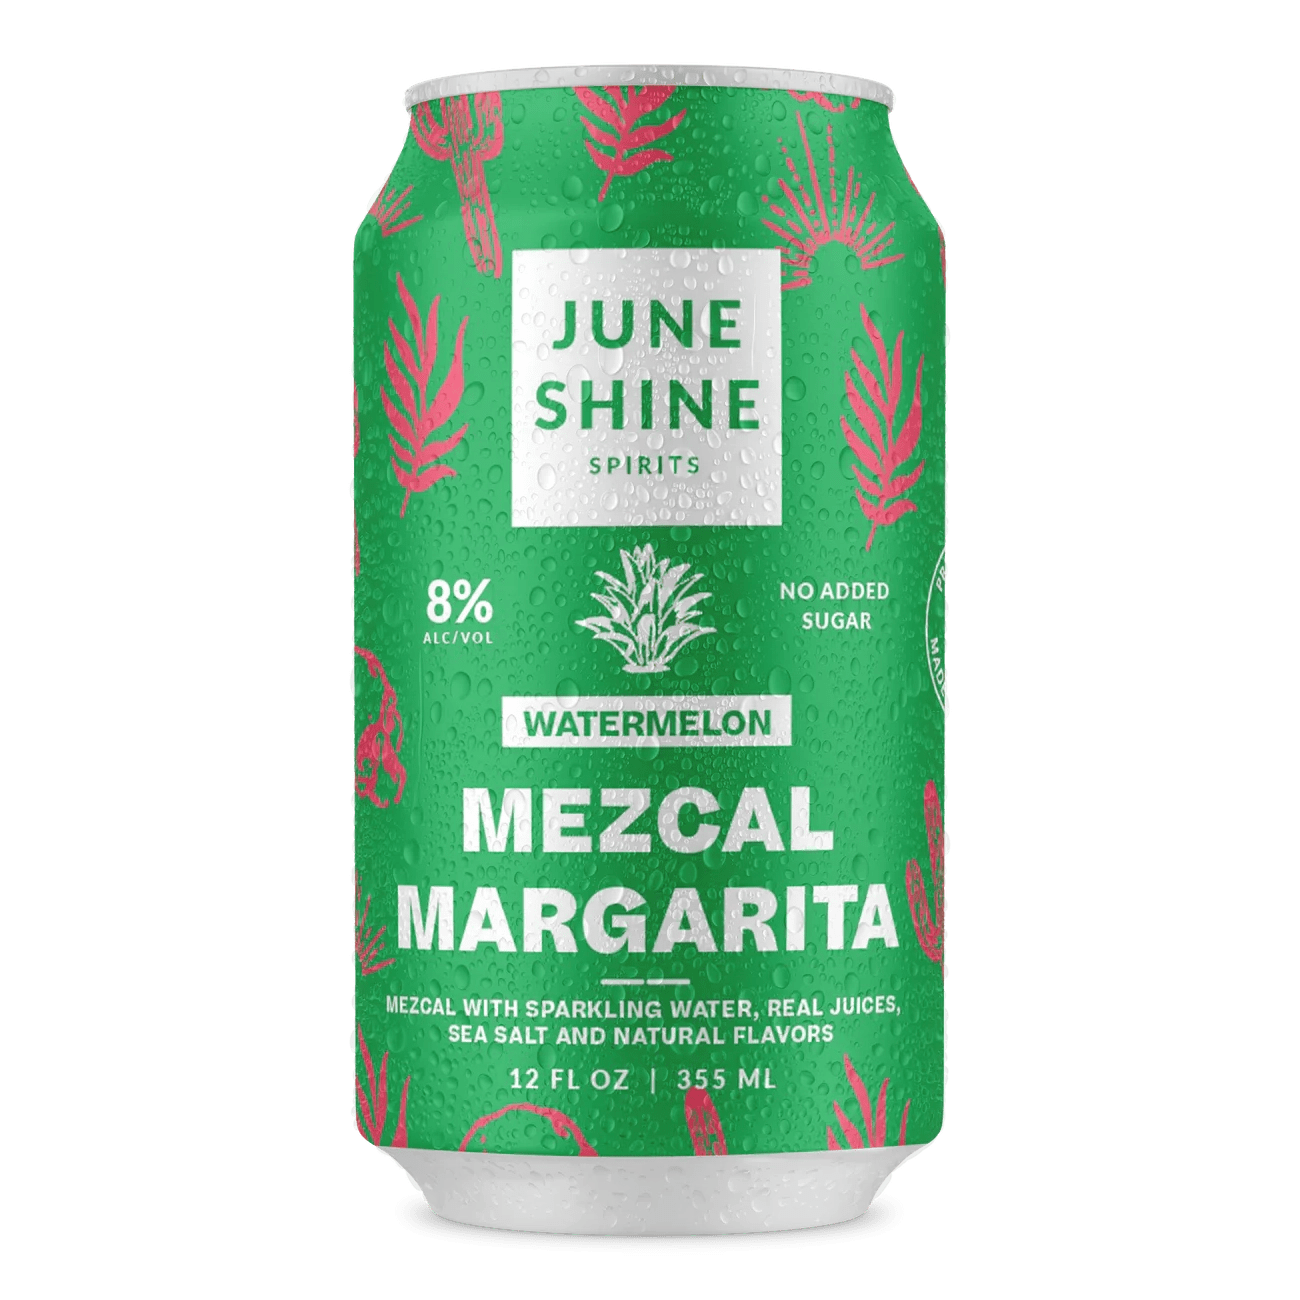 Juneshine Watermelon Mezcal Margarita 4 Pack